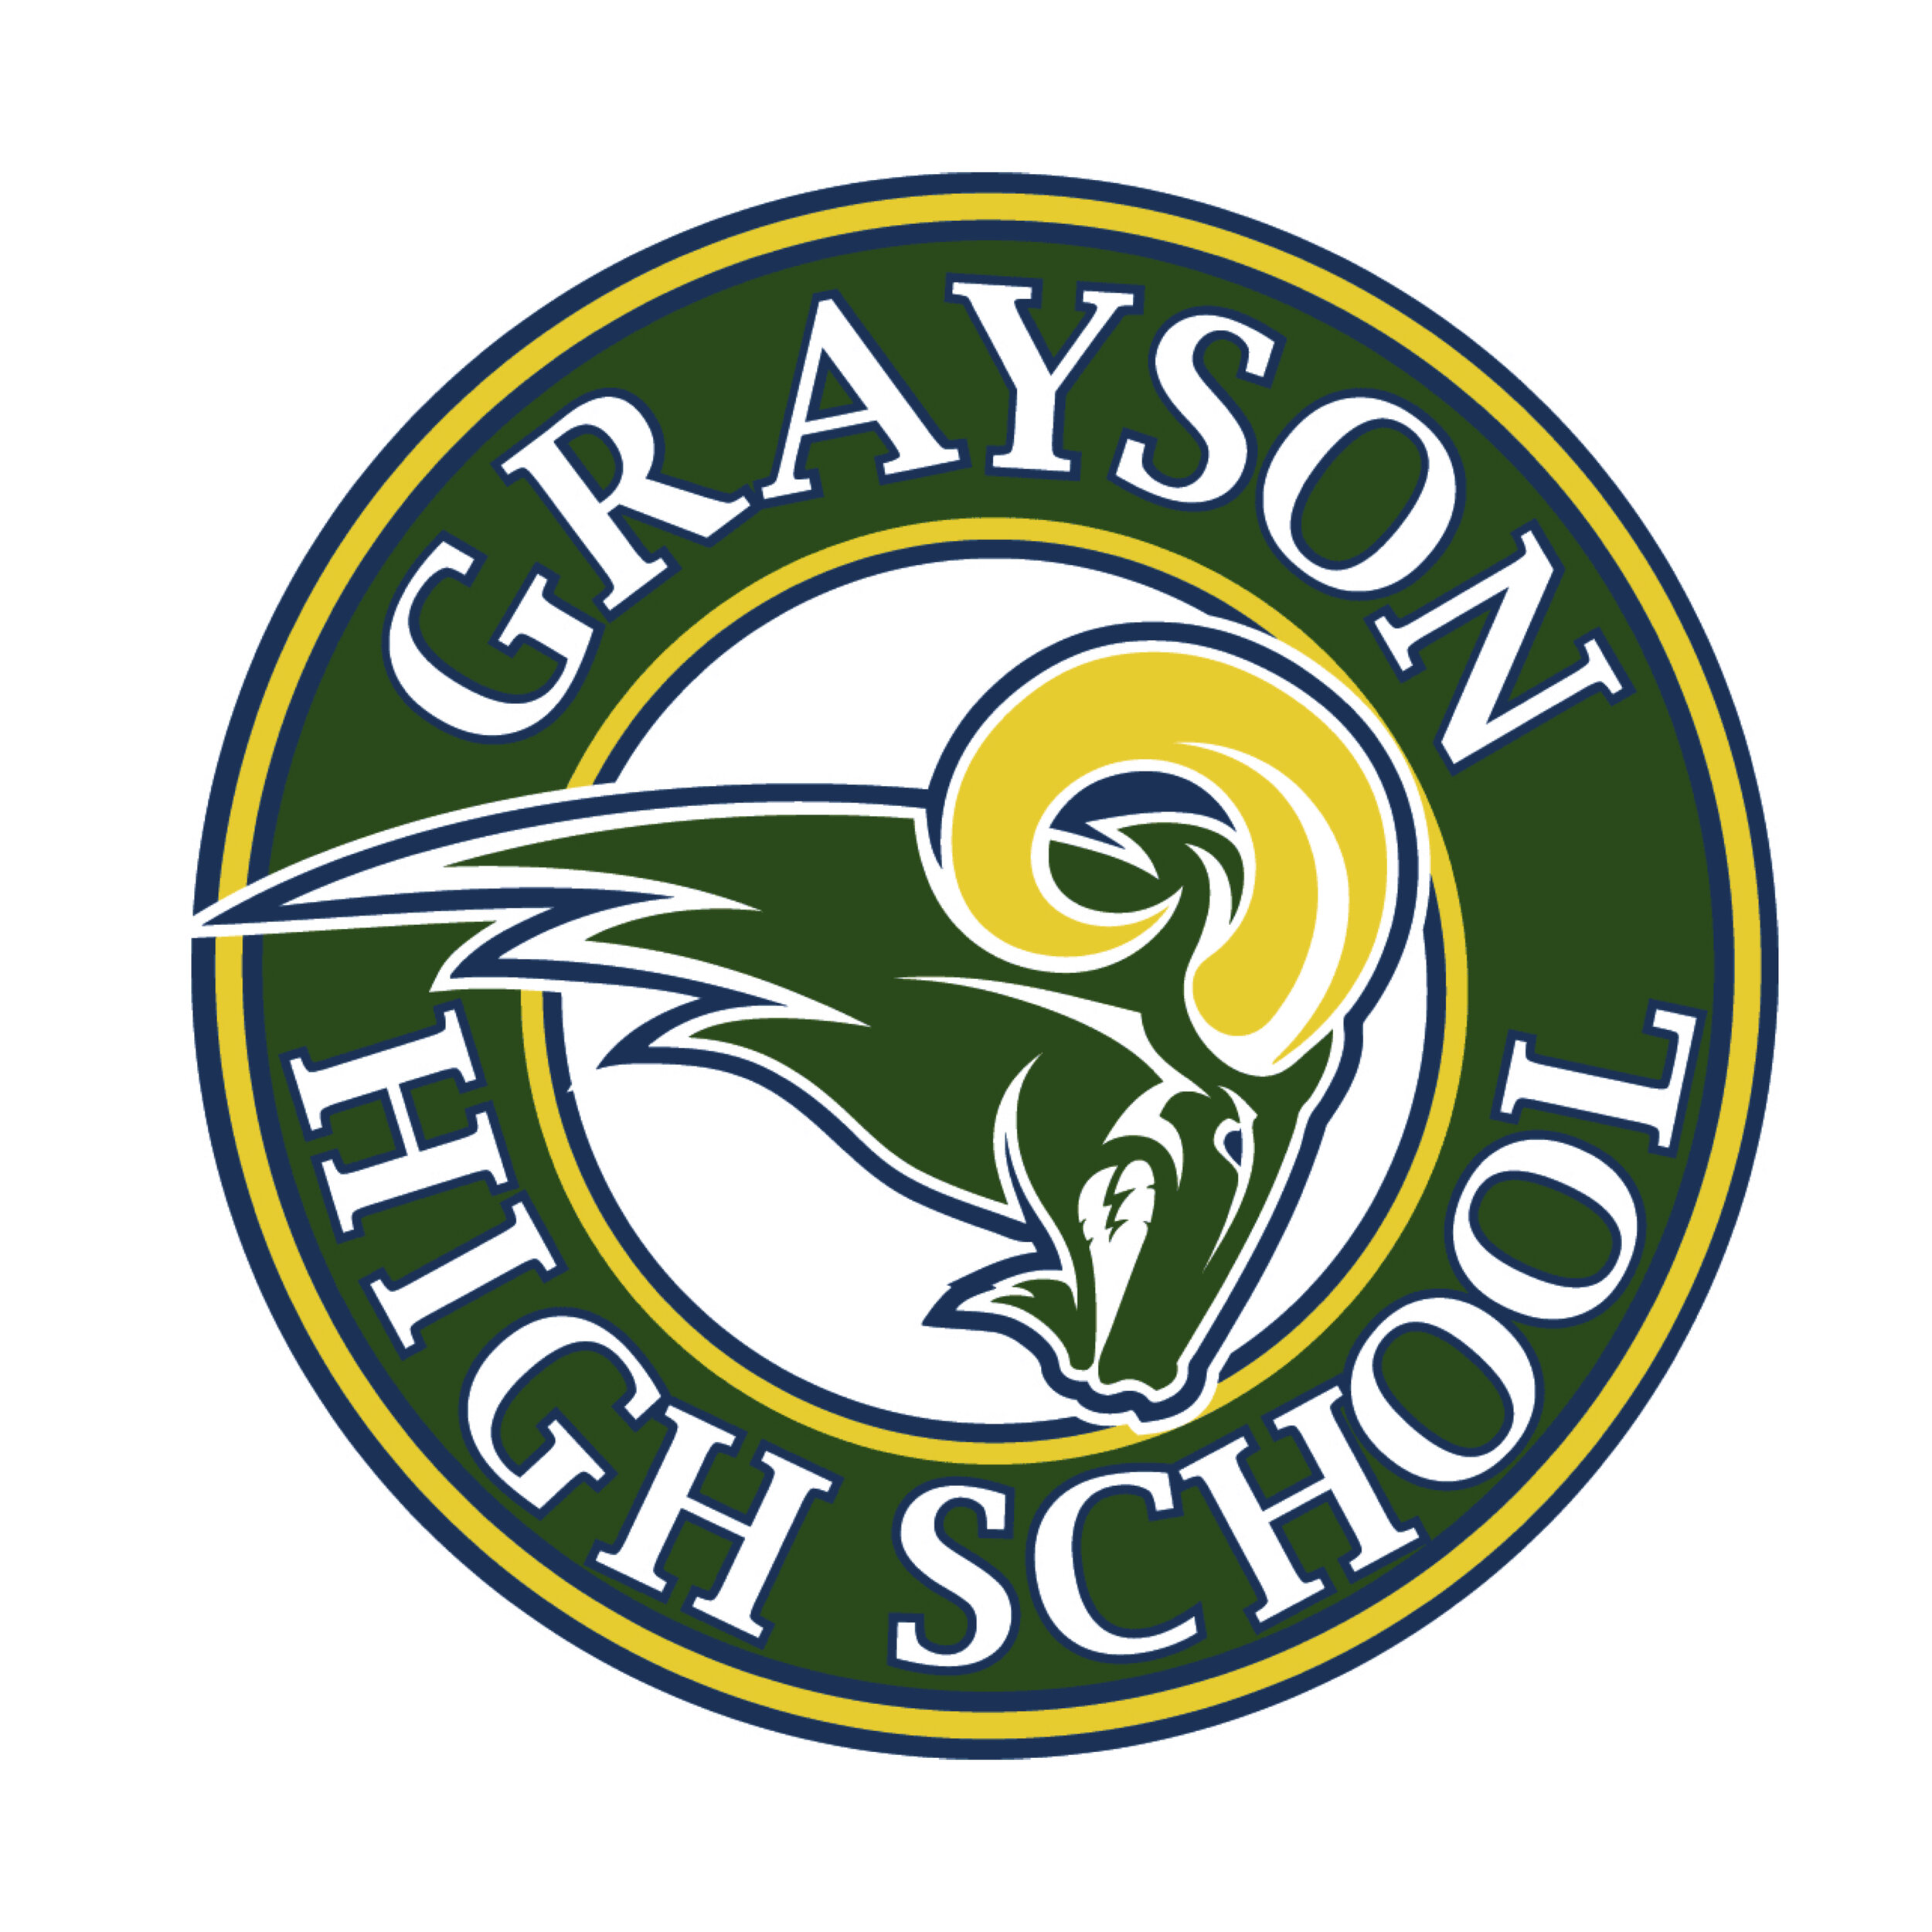 grayson high school logo.jpg